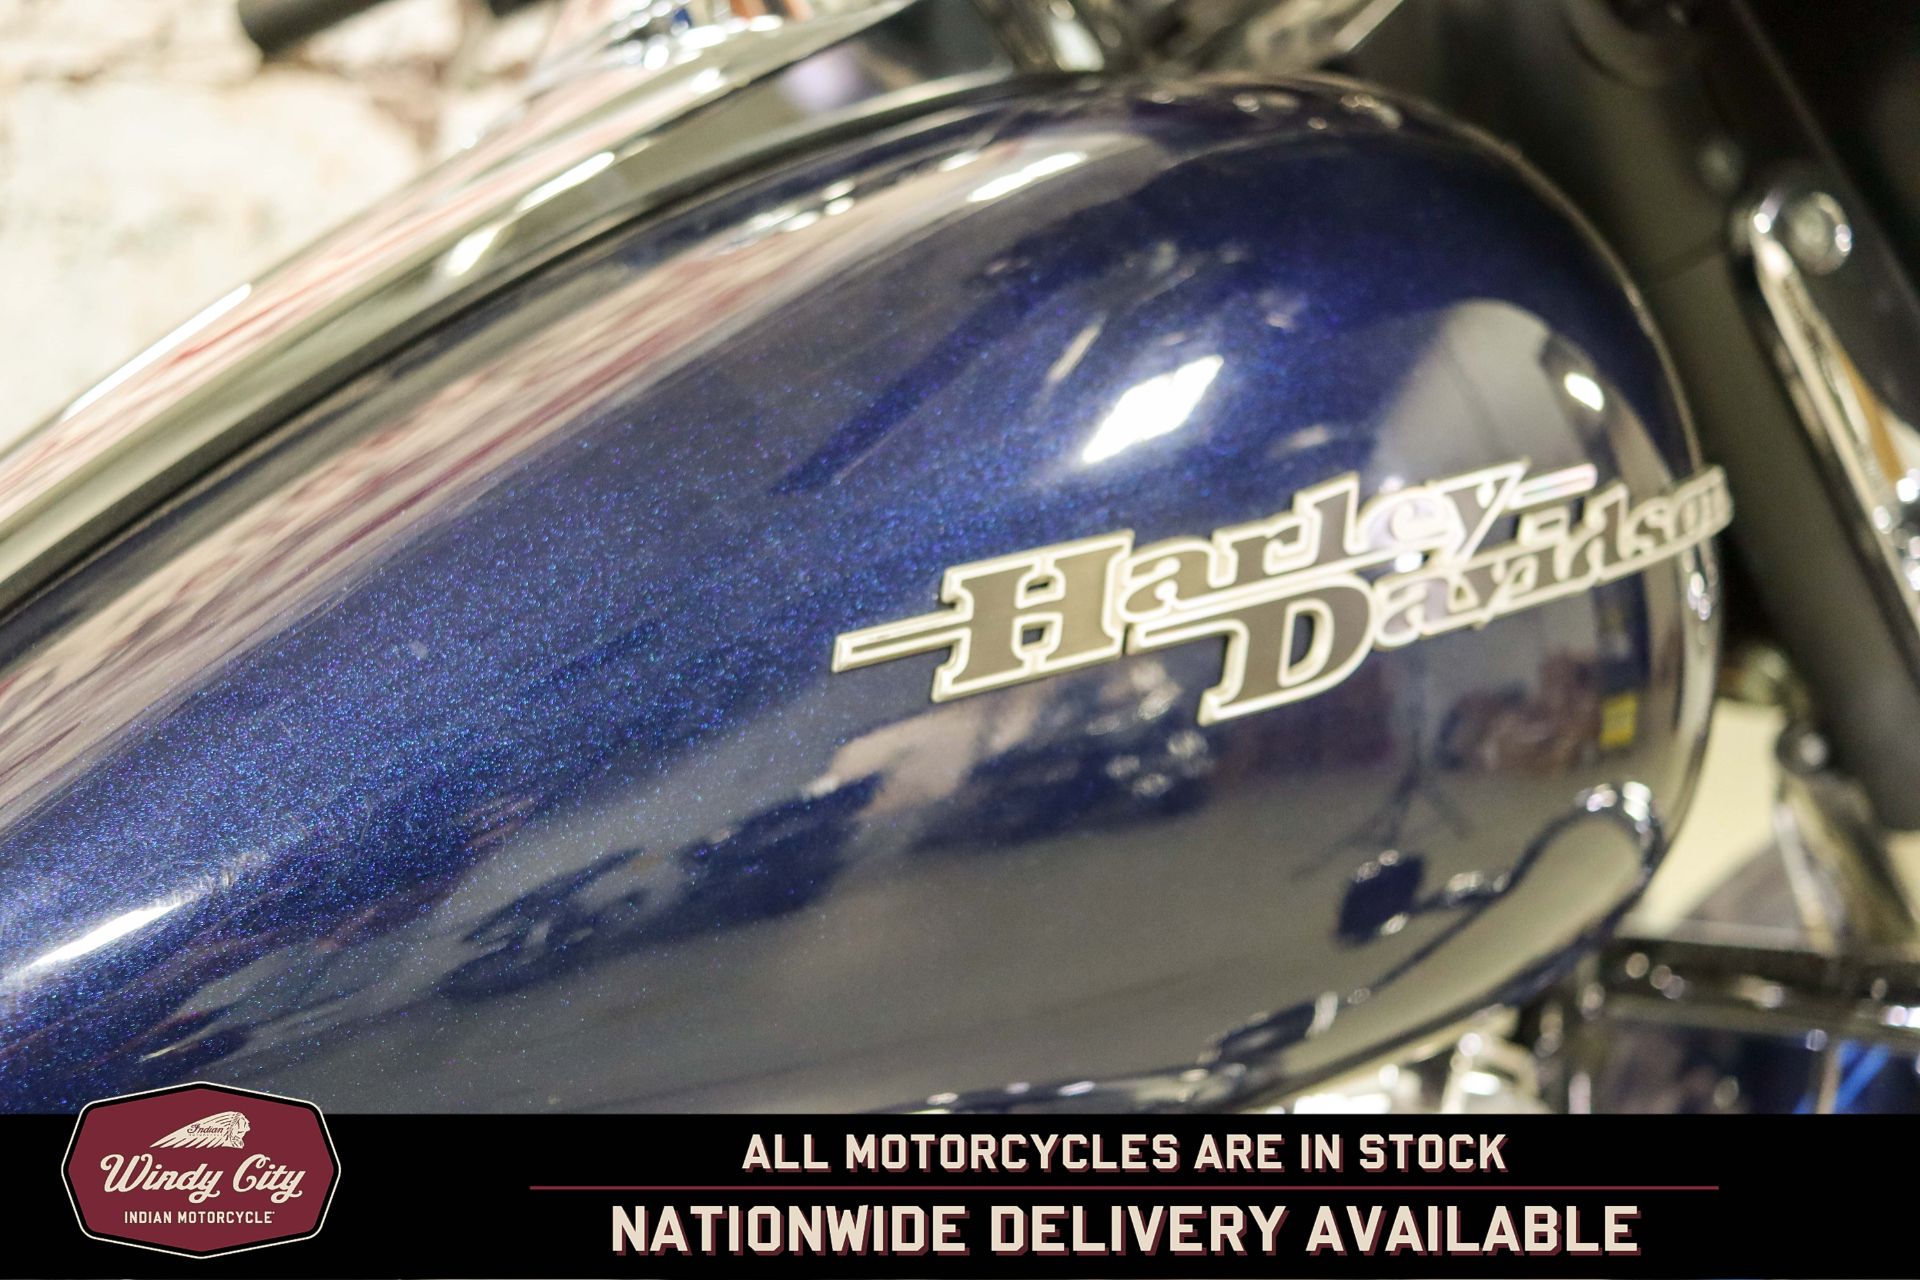 2014 Harley-Davidson Street Glide® in Lake Villa, Illinois - Photo 4